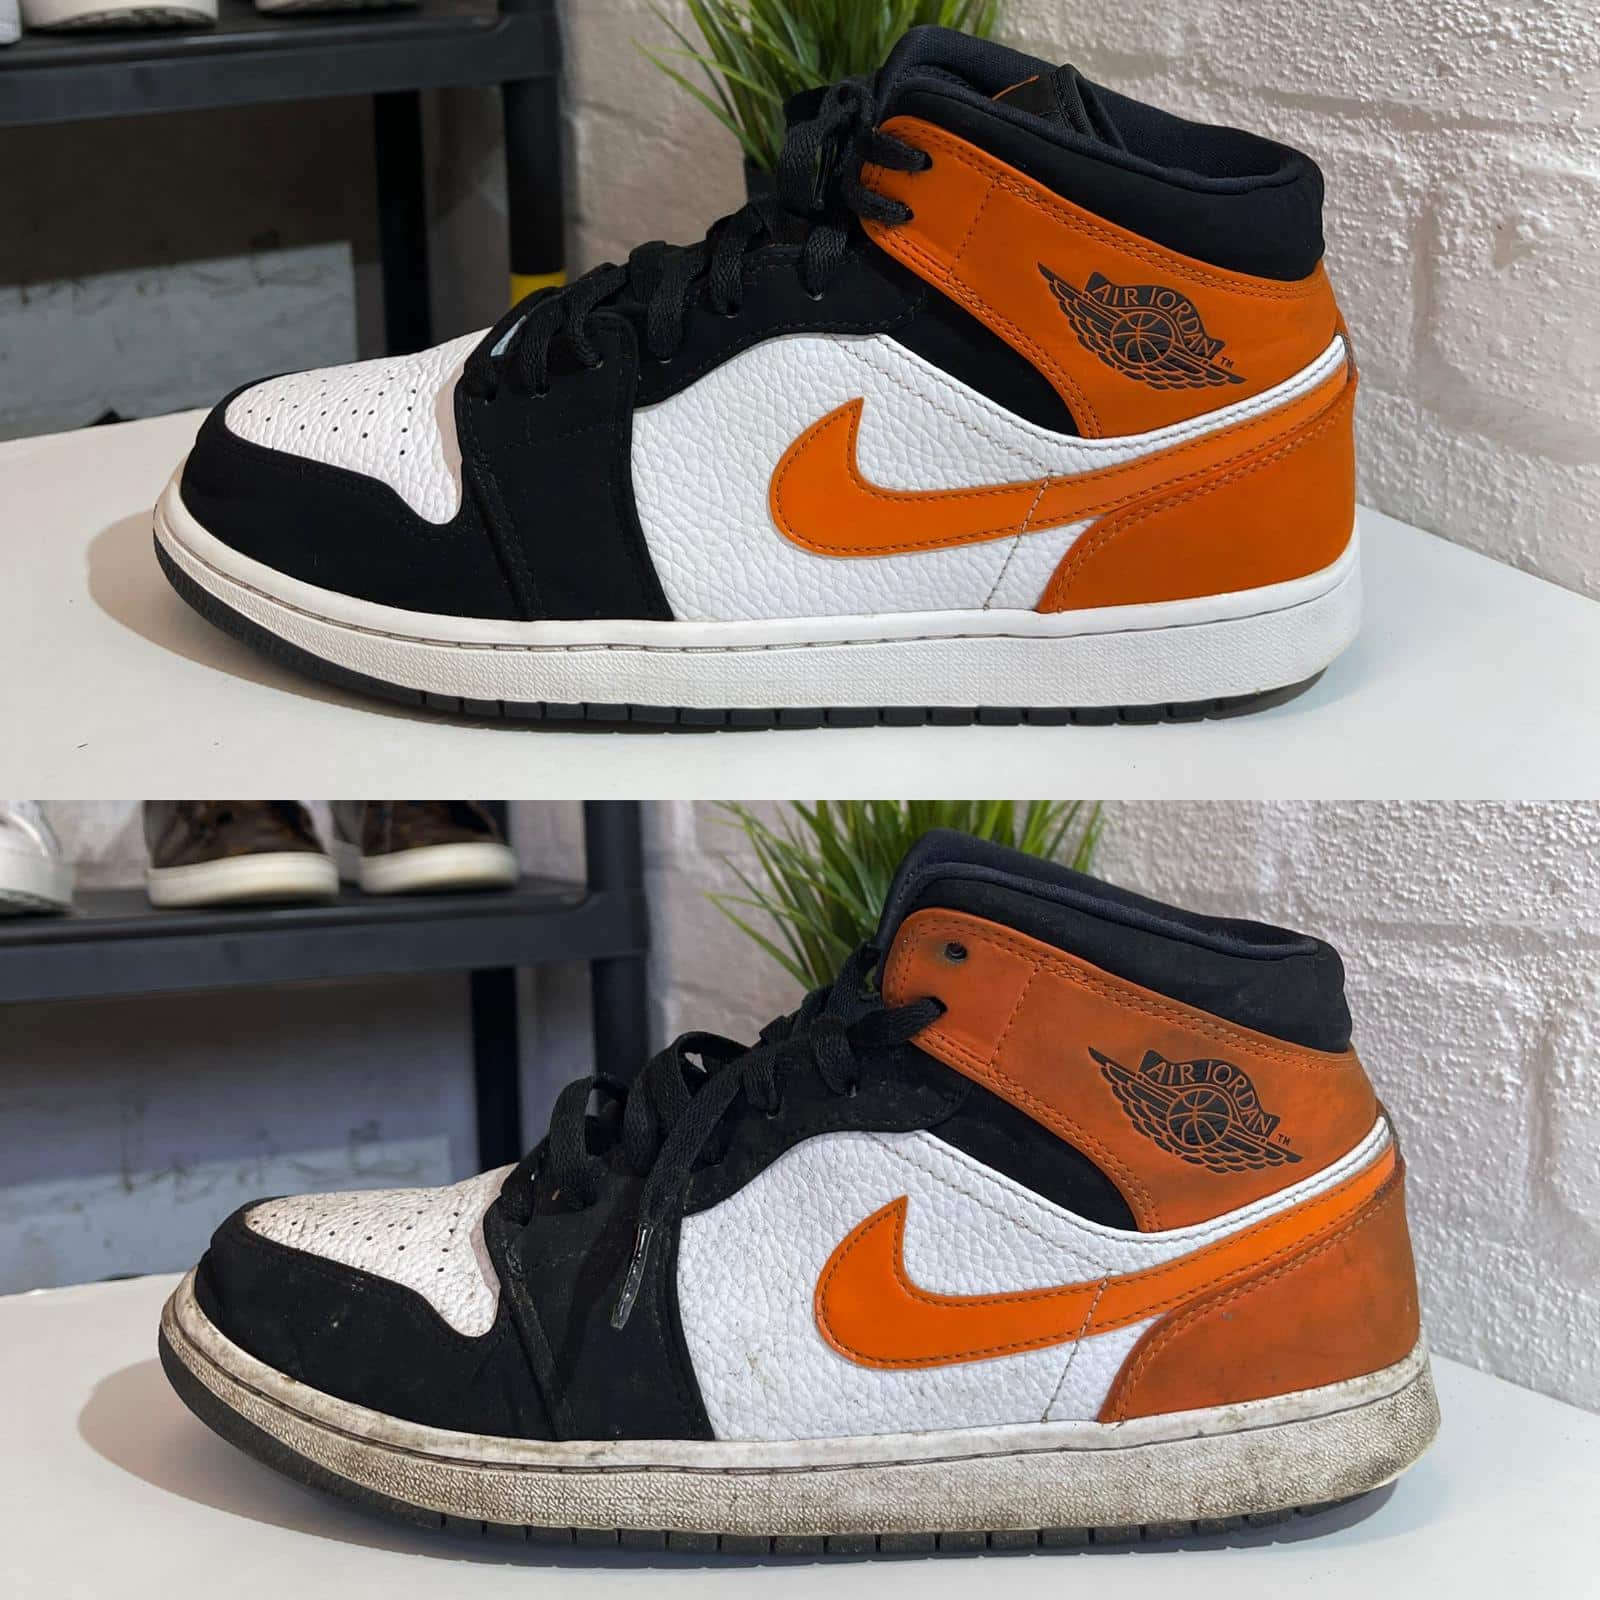 Orange jordans cleaned by revive sneaker laundry